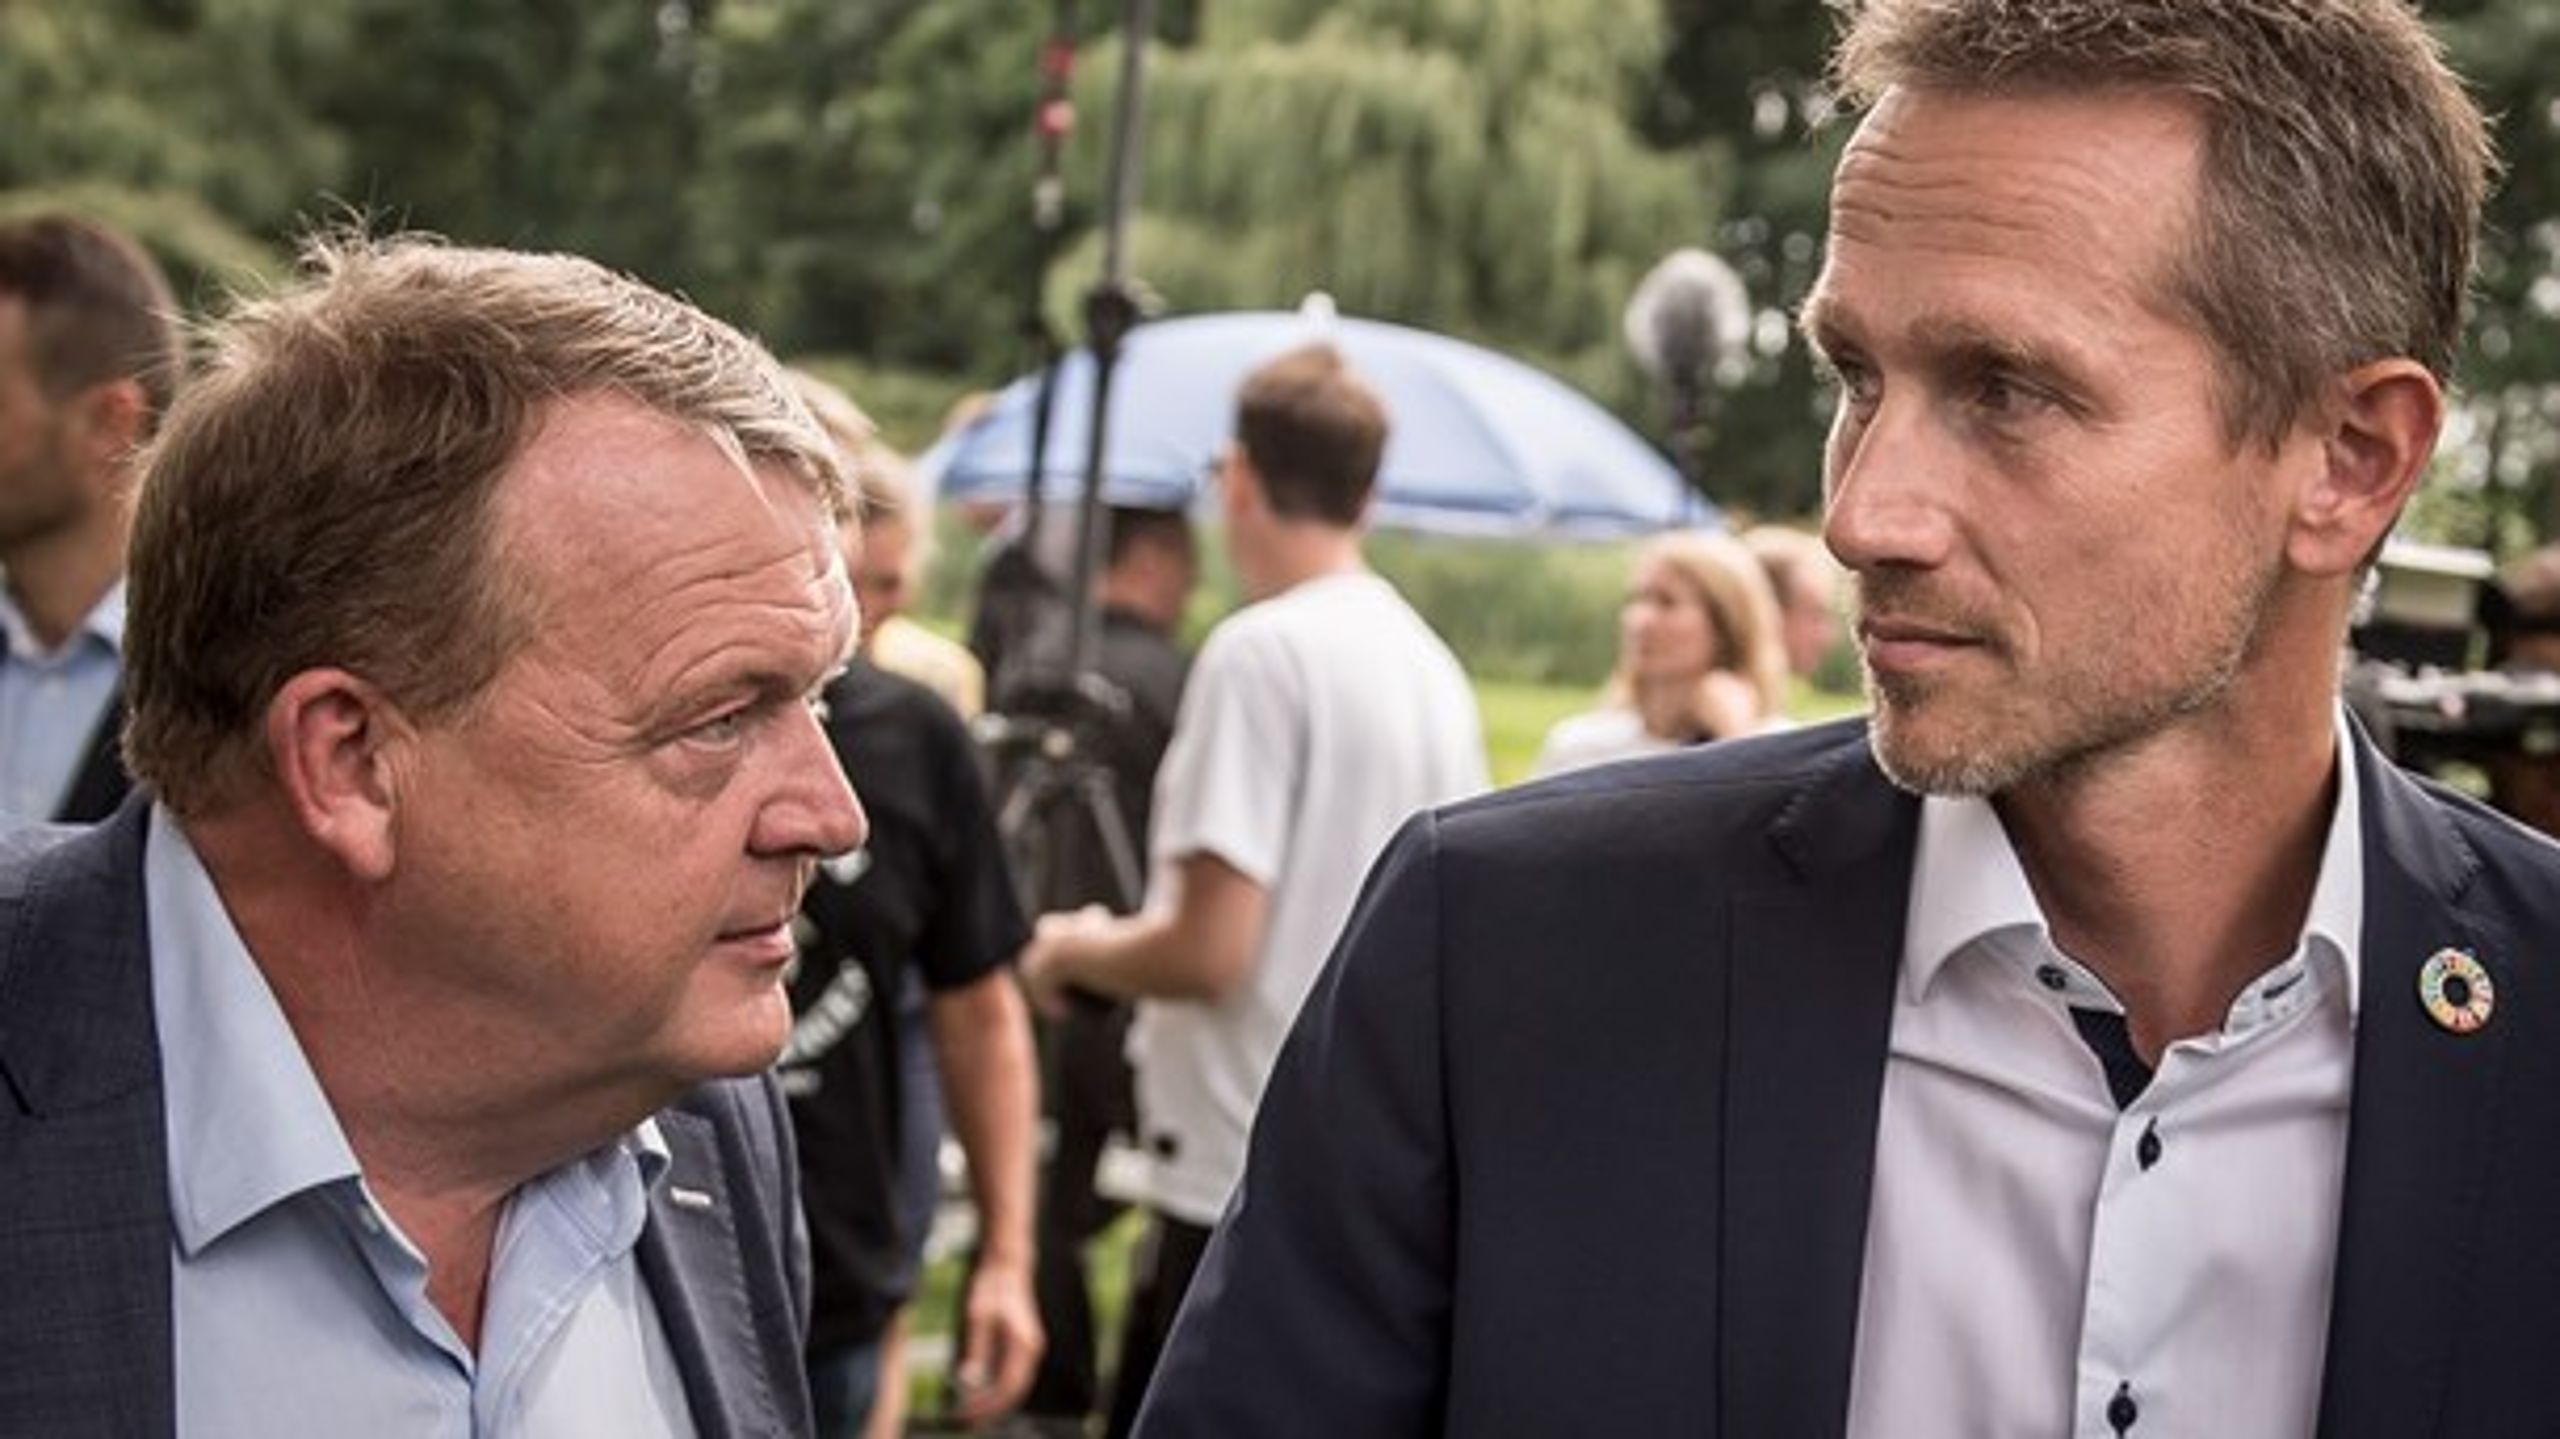 Venstre har tildelt nye roller til tidligere formand og næstformand Kristian Jensen og Lars Løkke Rasmussen.